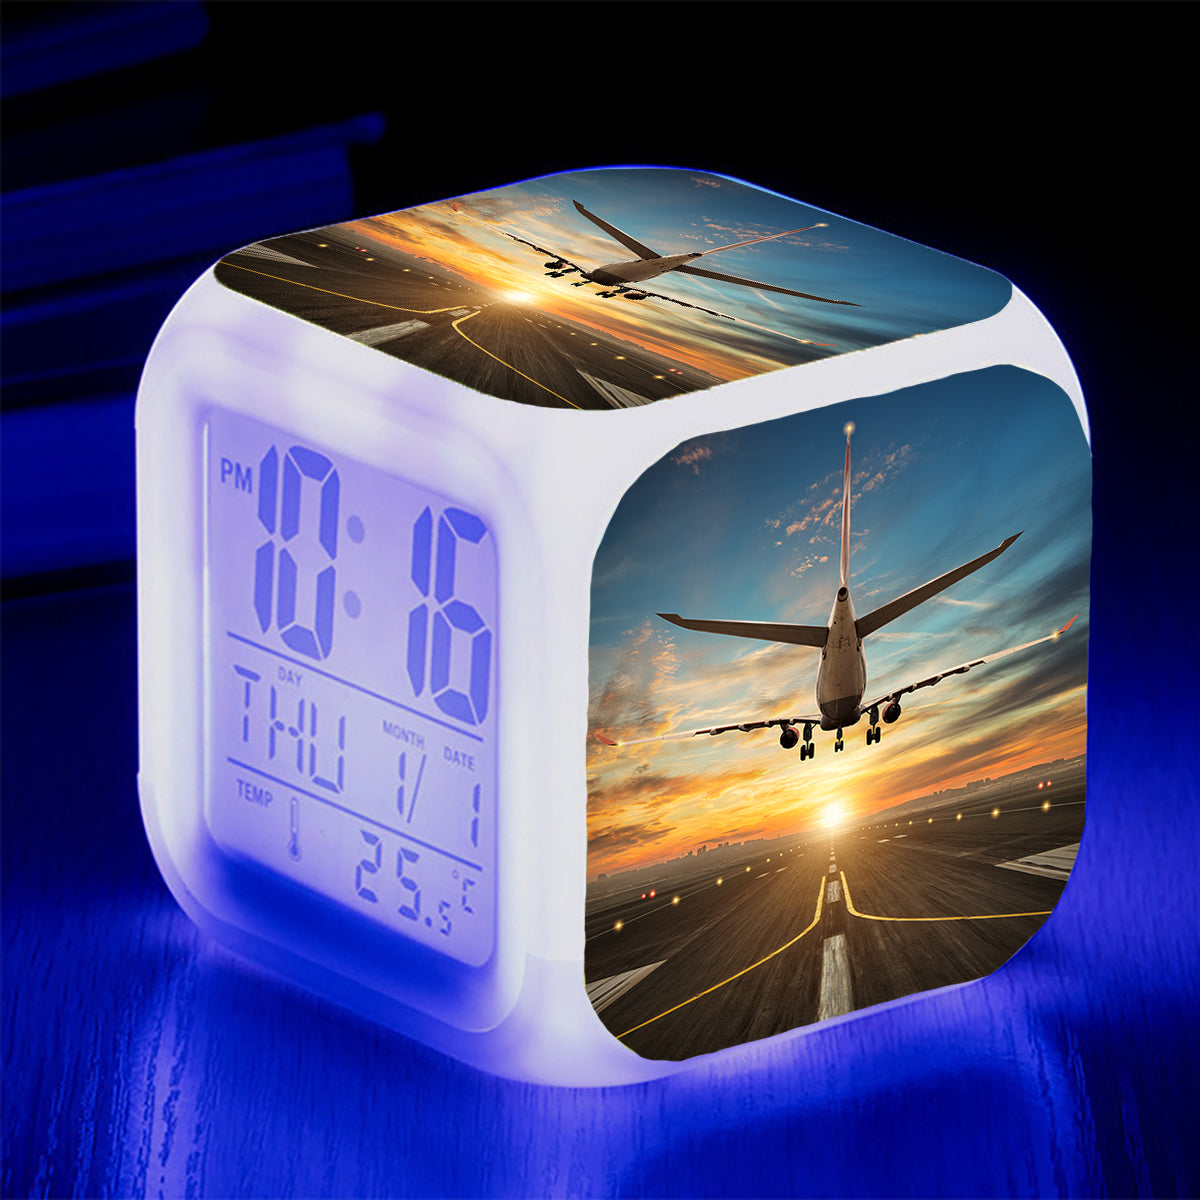 Airplane over Runway Towards the Sunrise Designed "7 Colour" Digital Alarm Clock